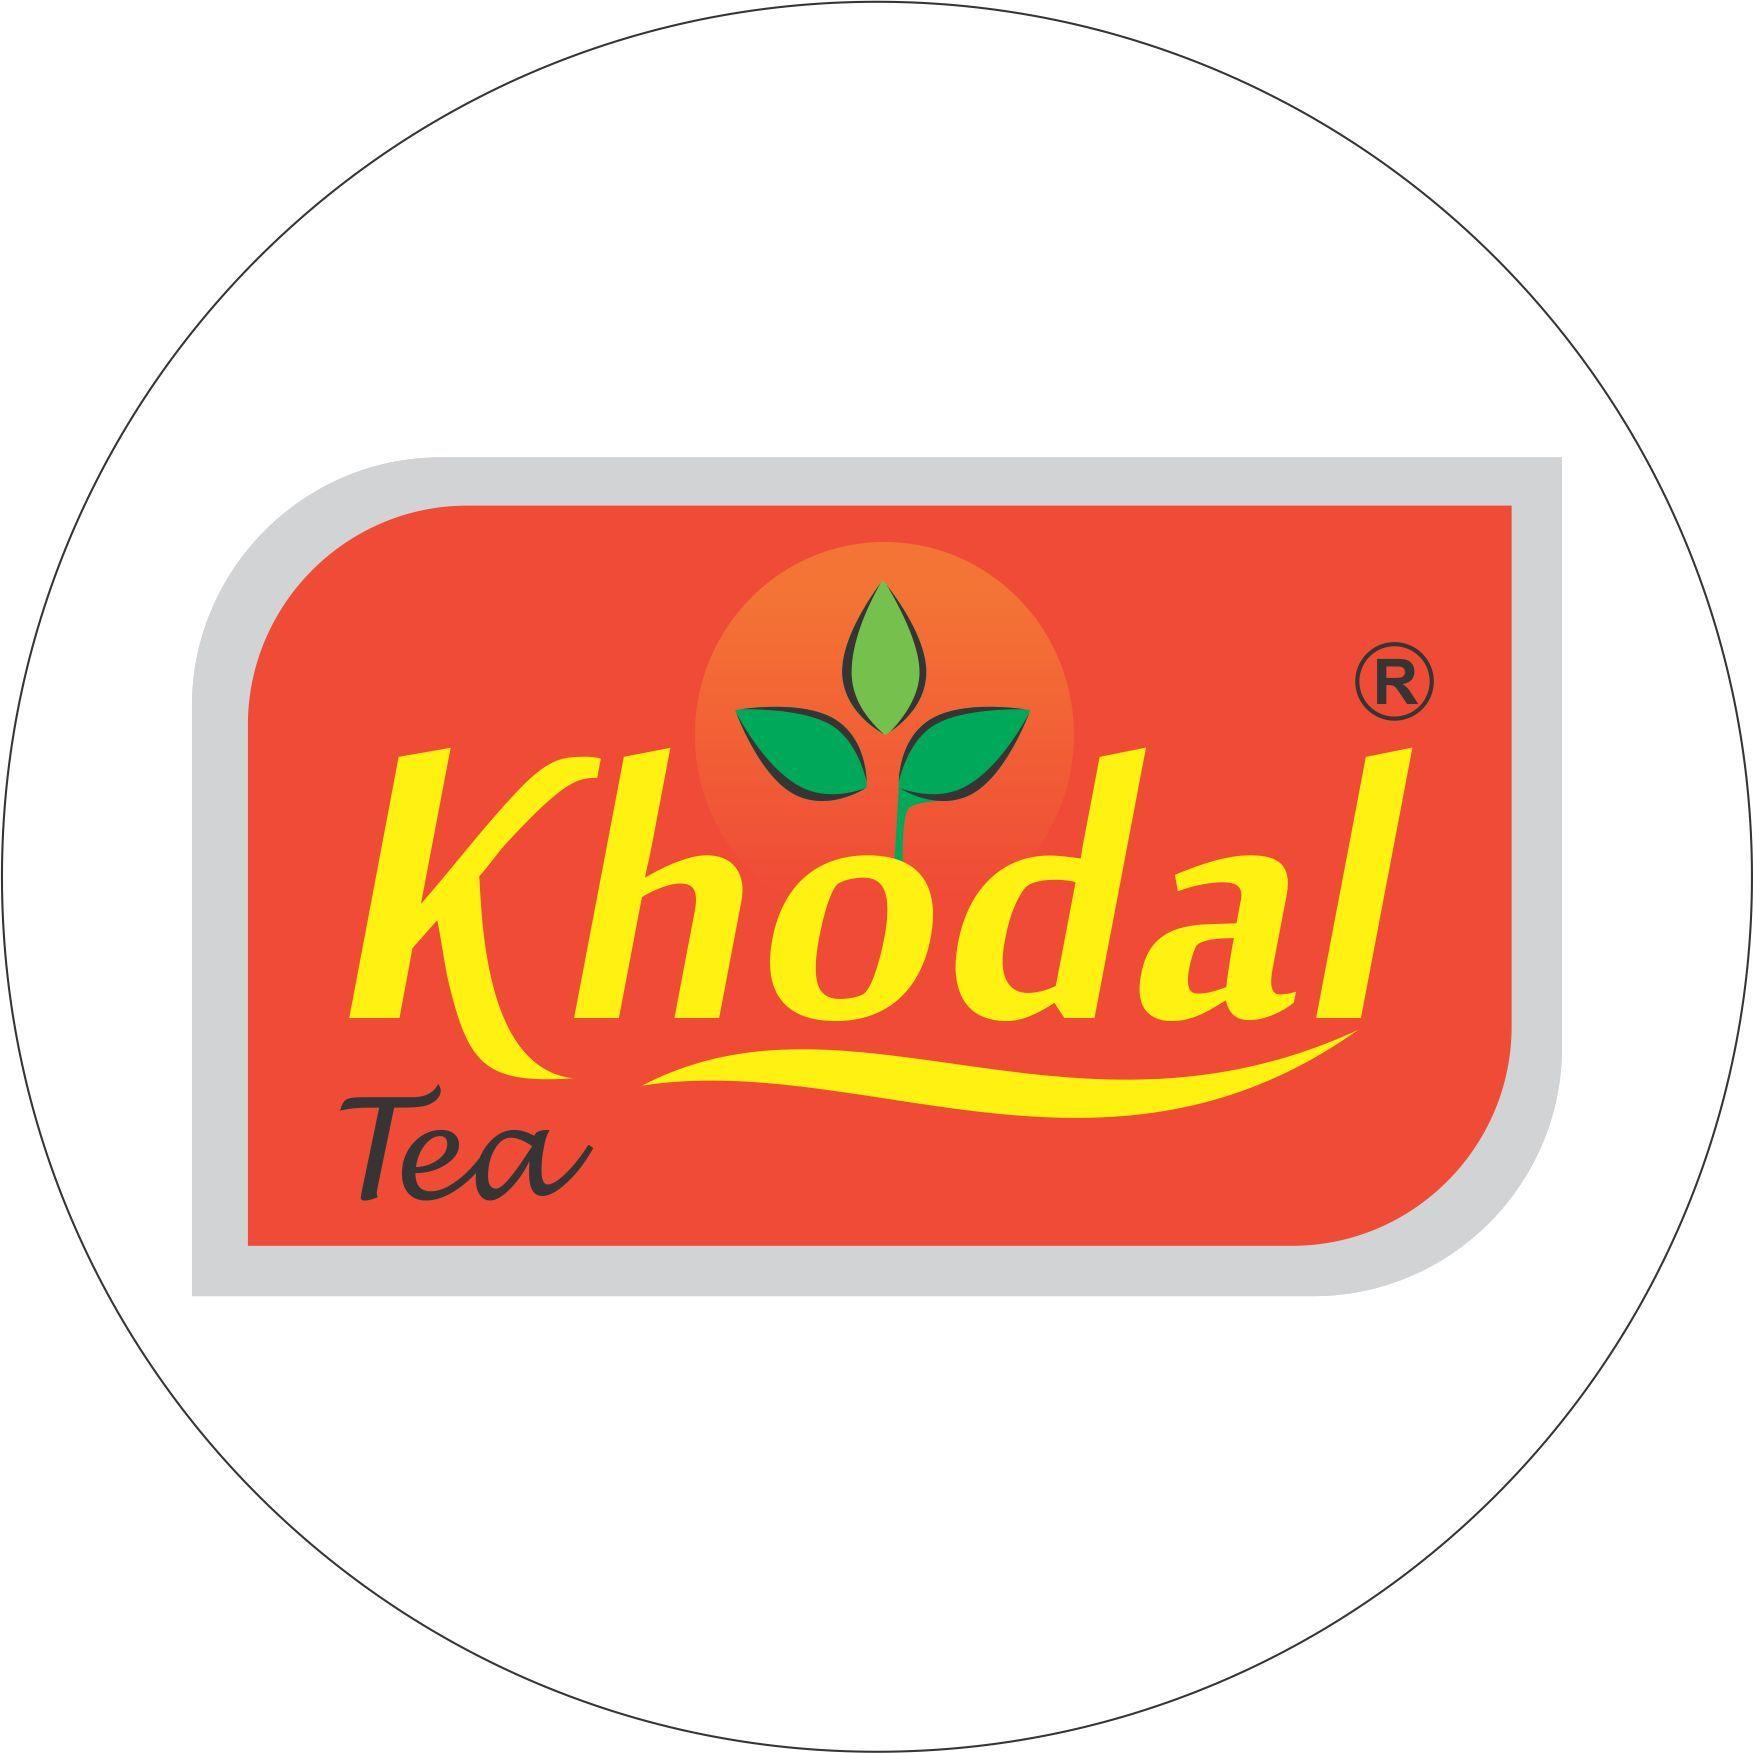 Khodal Tea Product